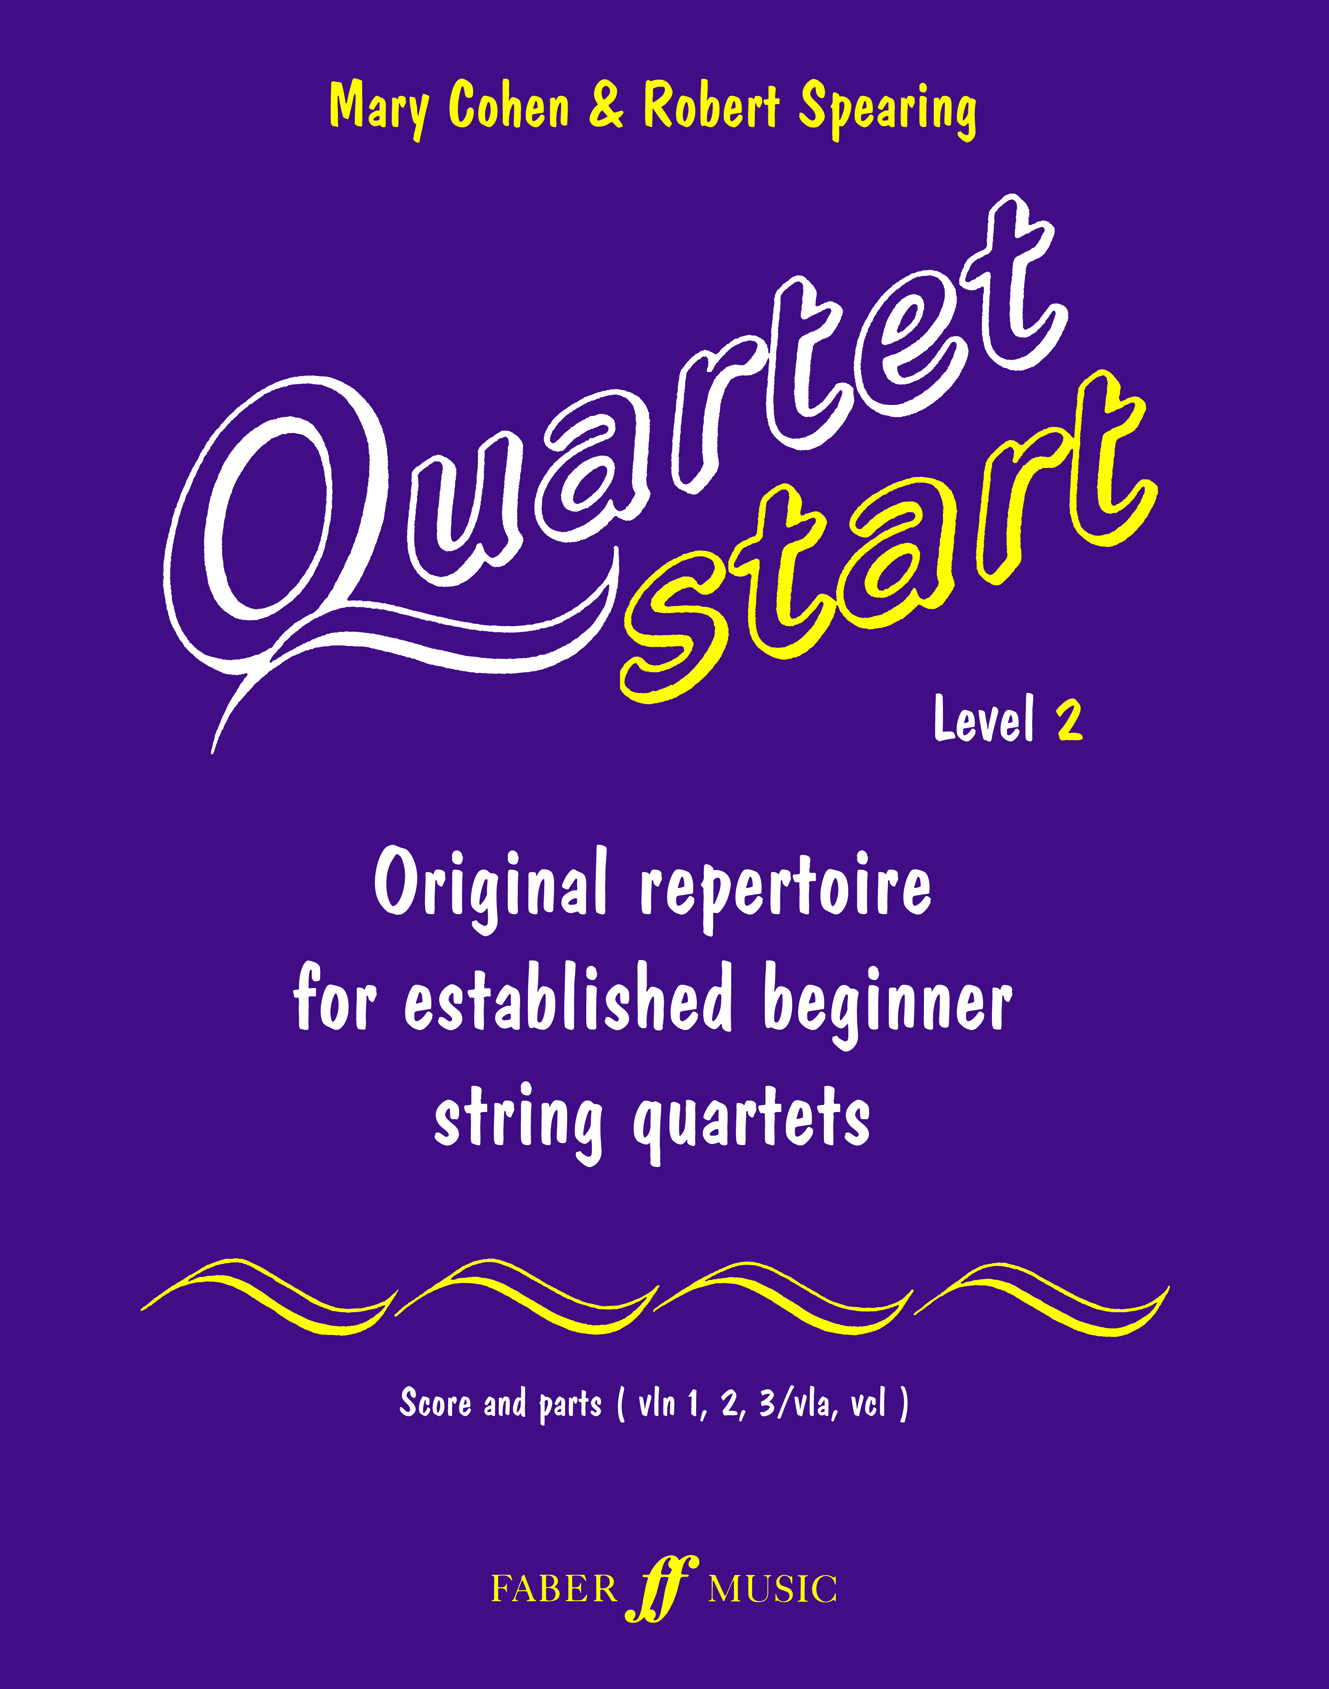 Quartetstart Level 2